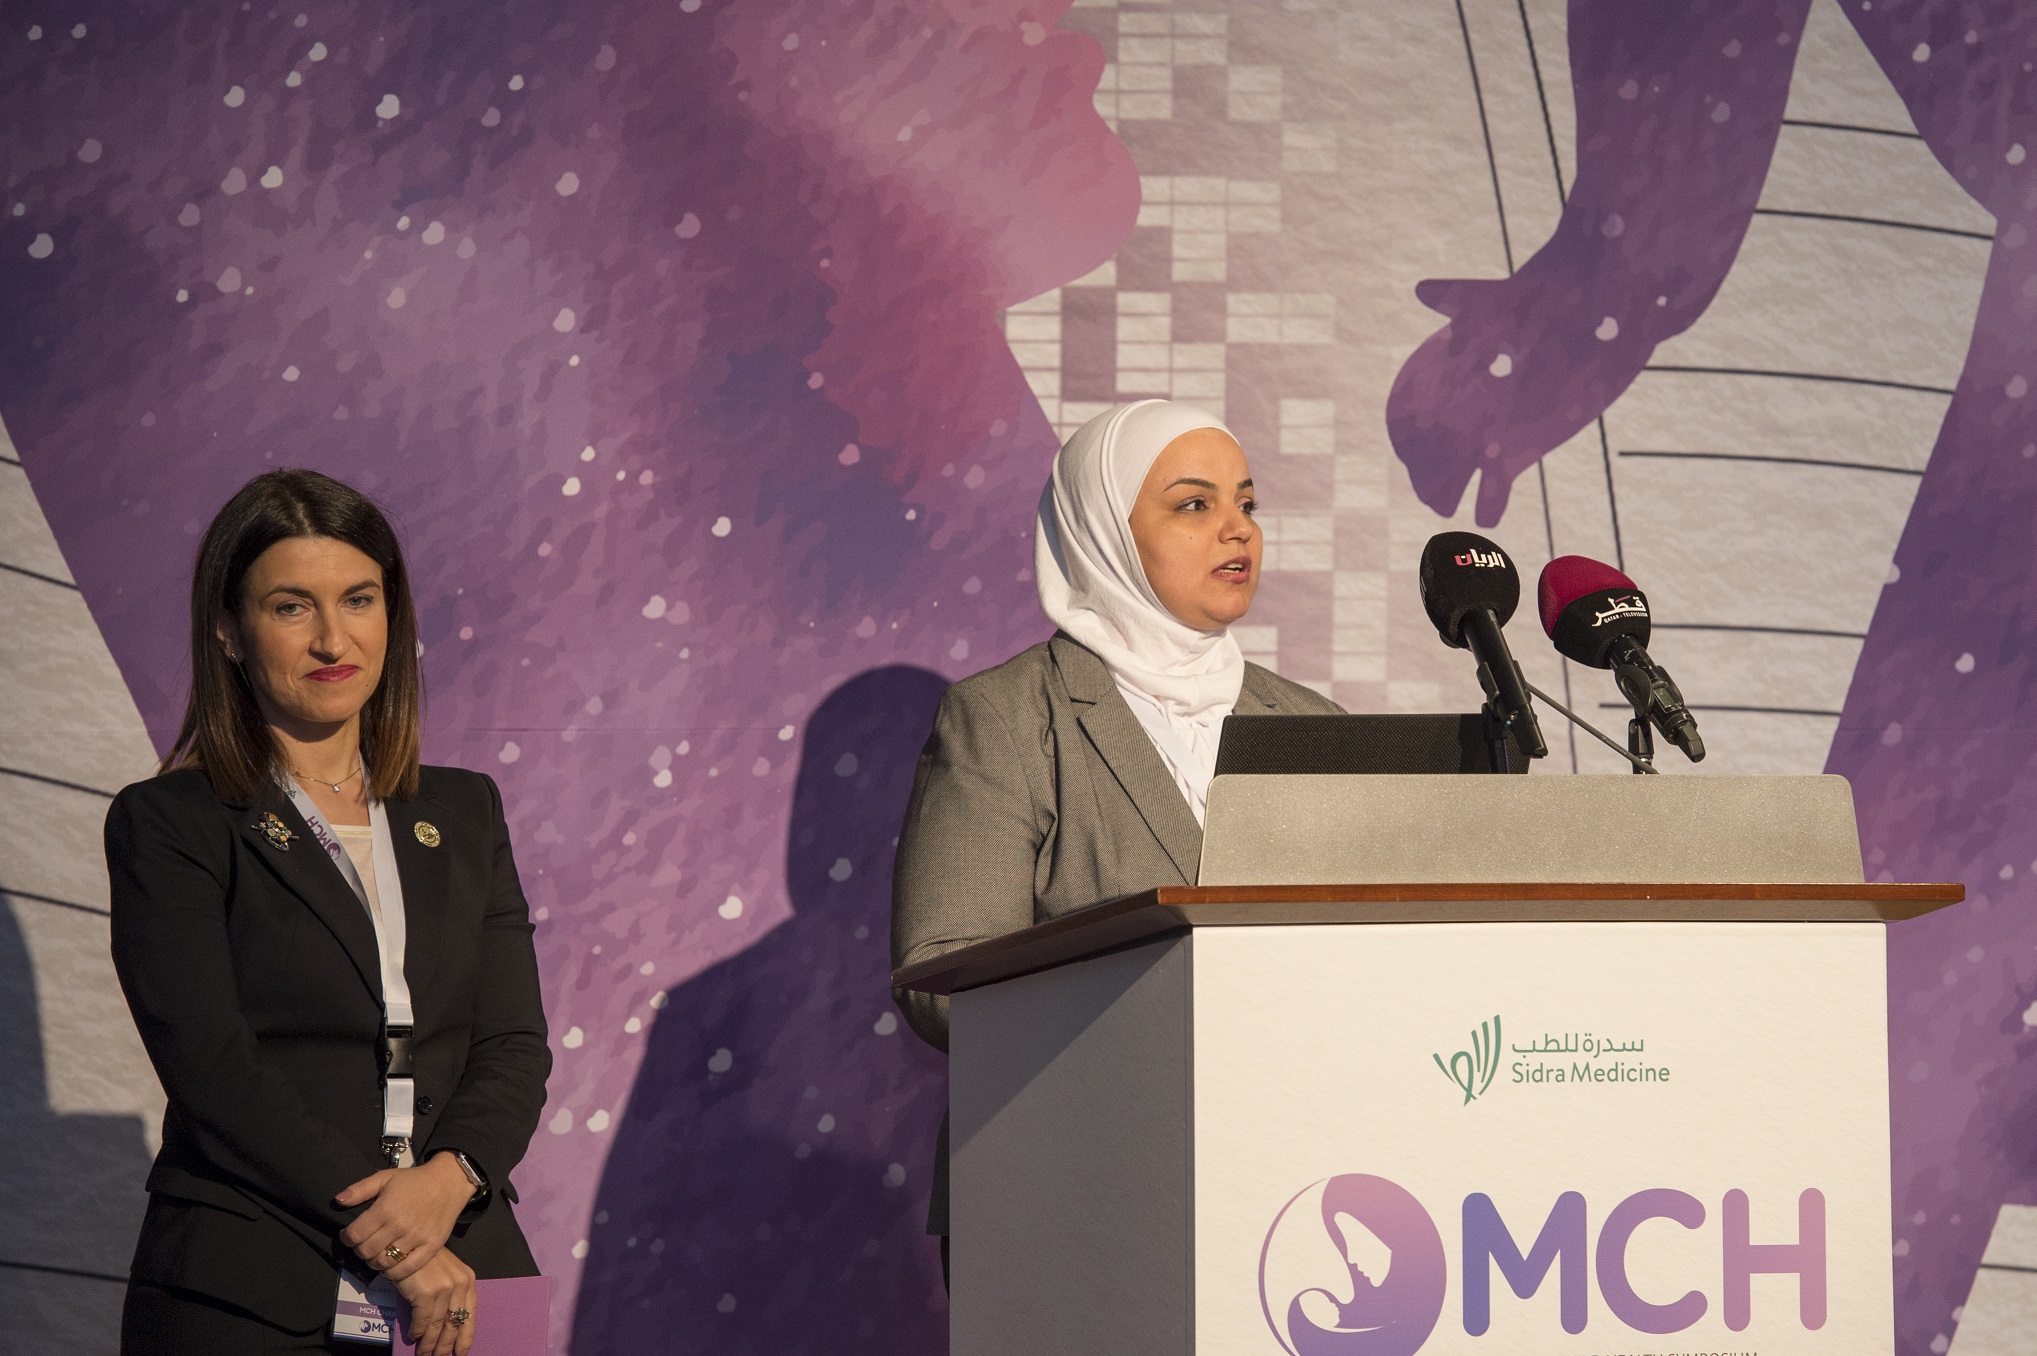 Dr. Annalisa Terranegra & Dr. Souhaila Al-Khodor -Co-Chairs of MCH2020